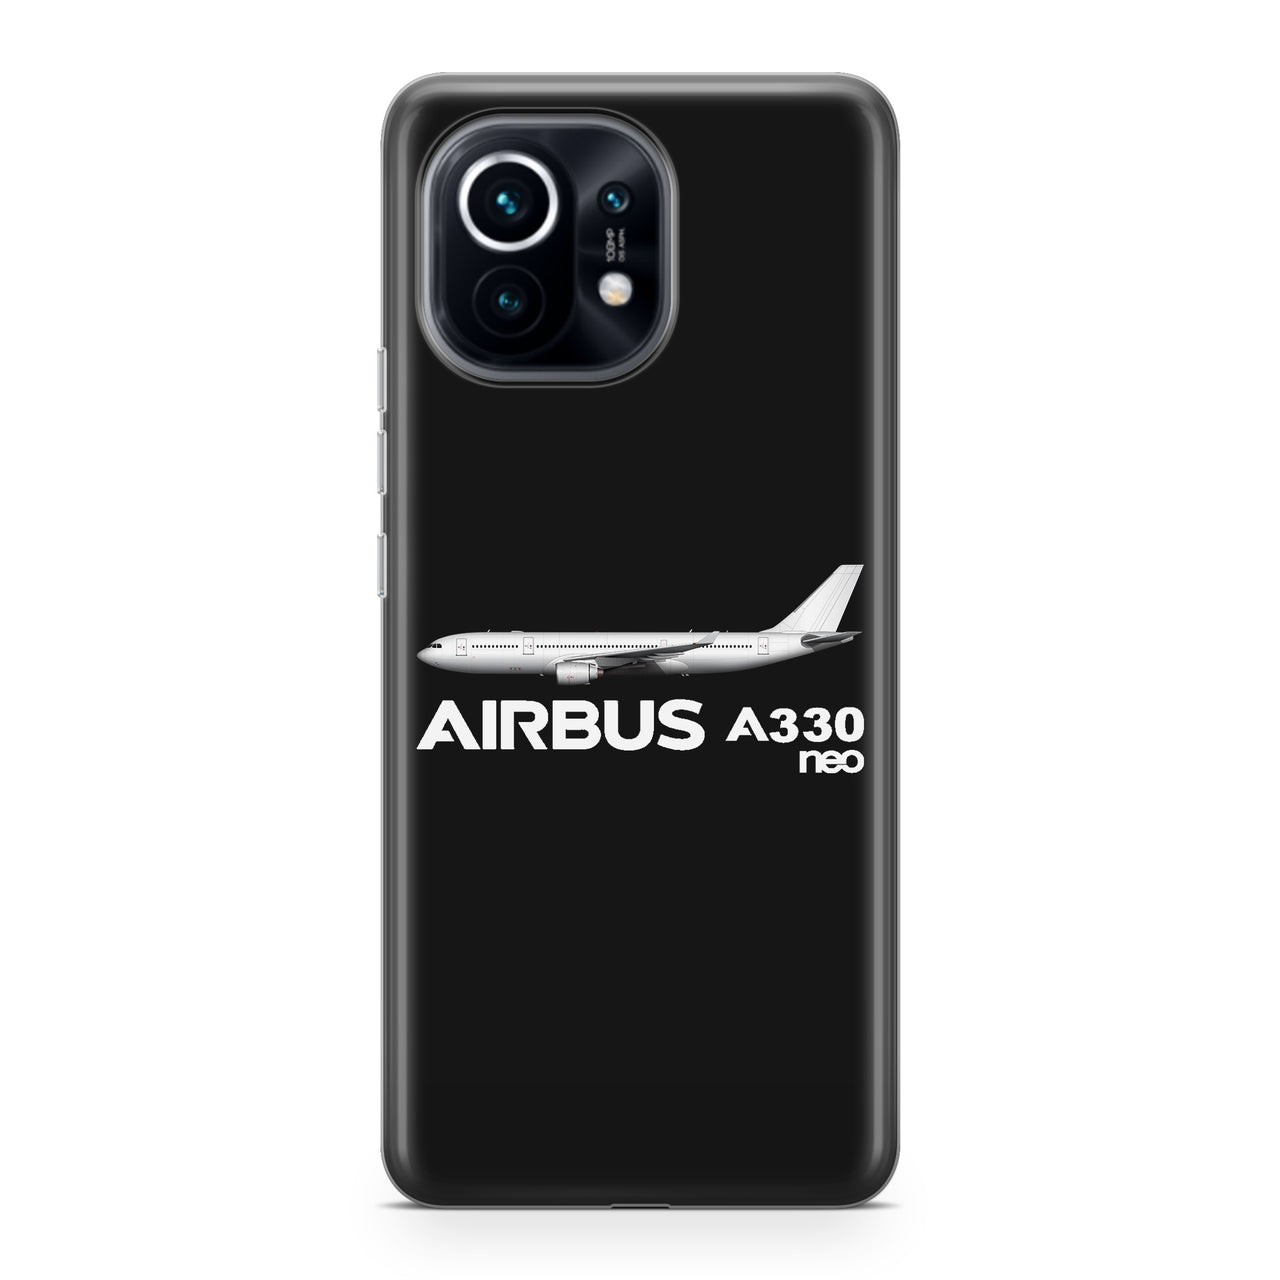 The Airbus A330neo Designed Xiaomi Cases